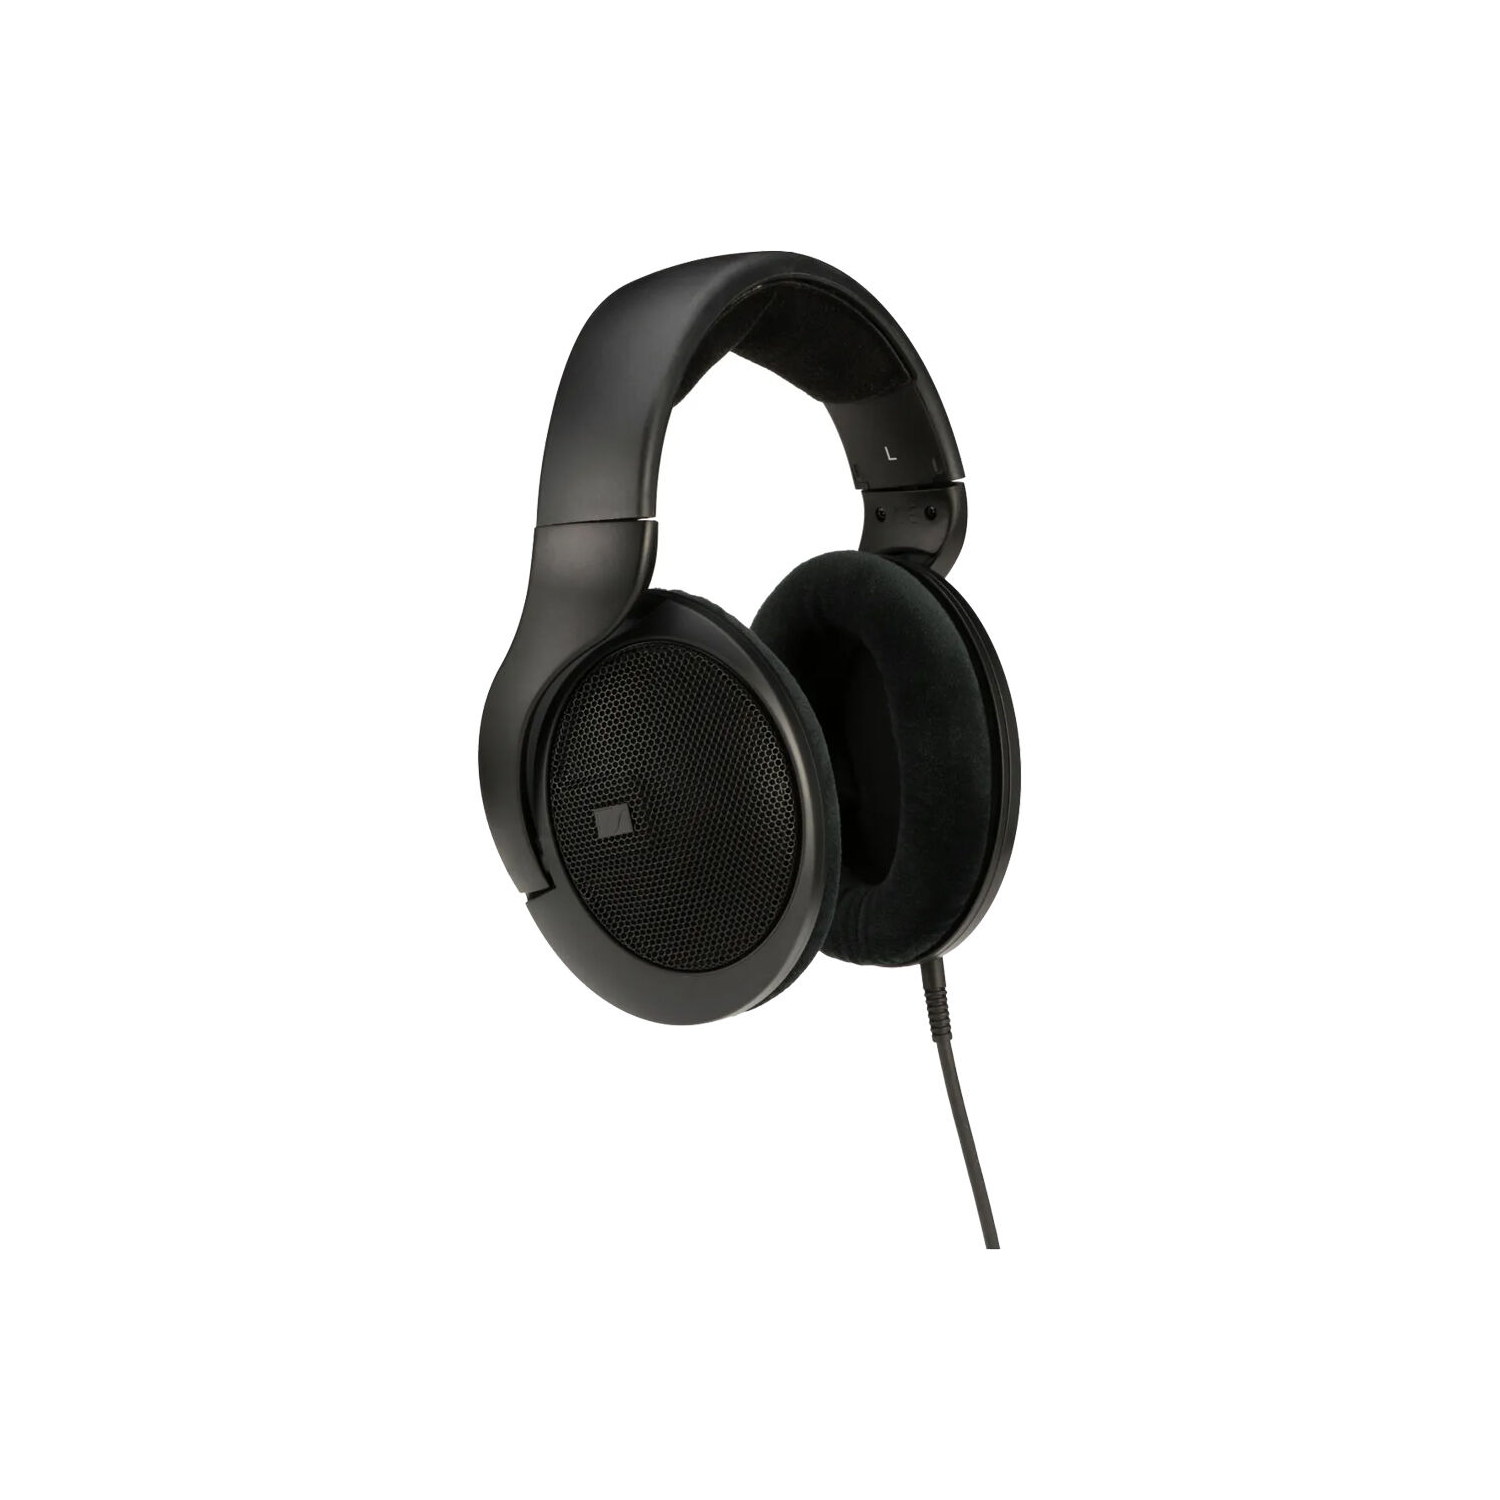 Sennheiser HD 400 Pro Studio Reference Headphones